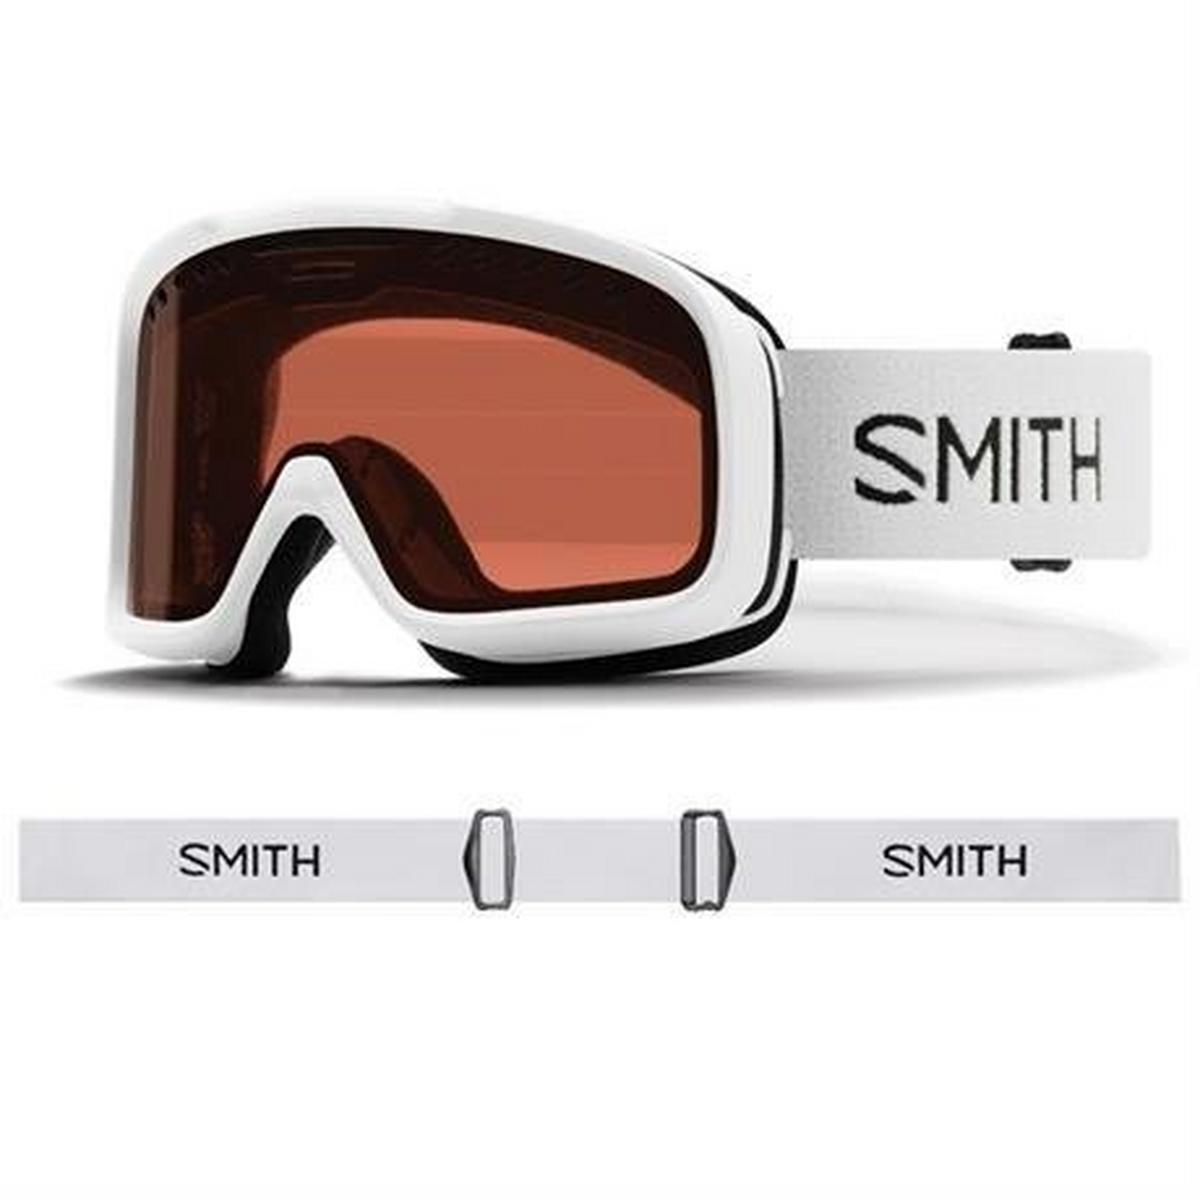 Smith Optics Smith Ski Goggles Project White RC36 Lens Cat 2